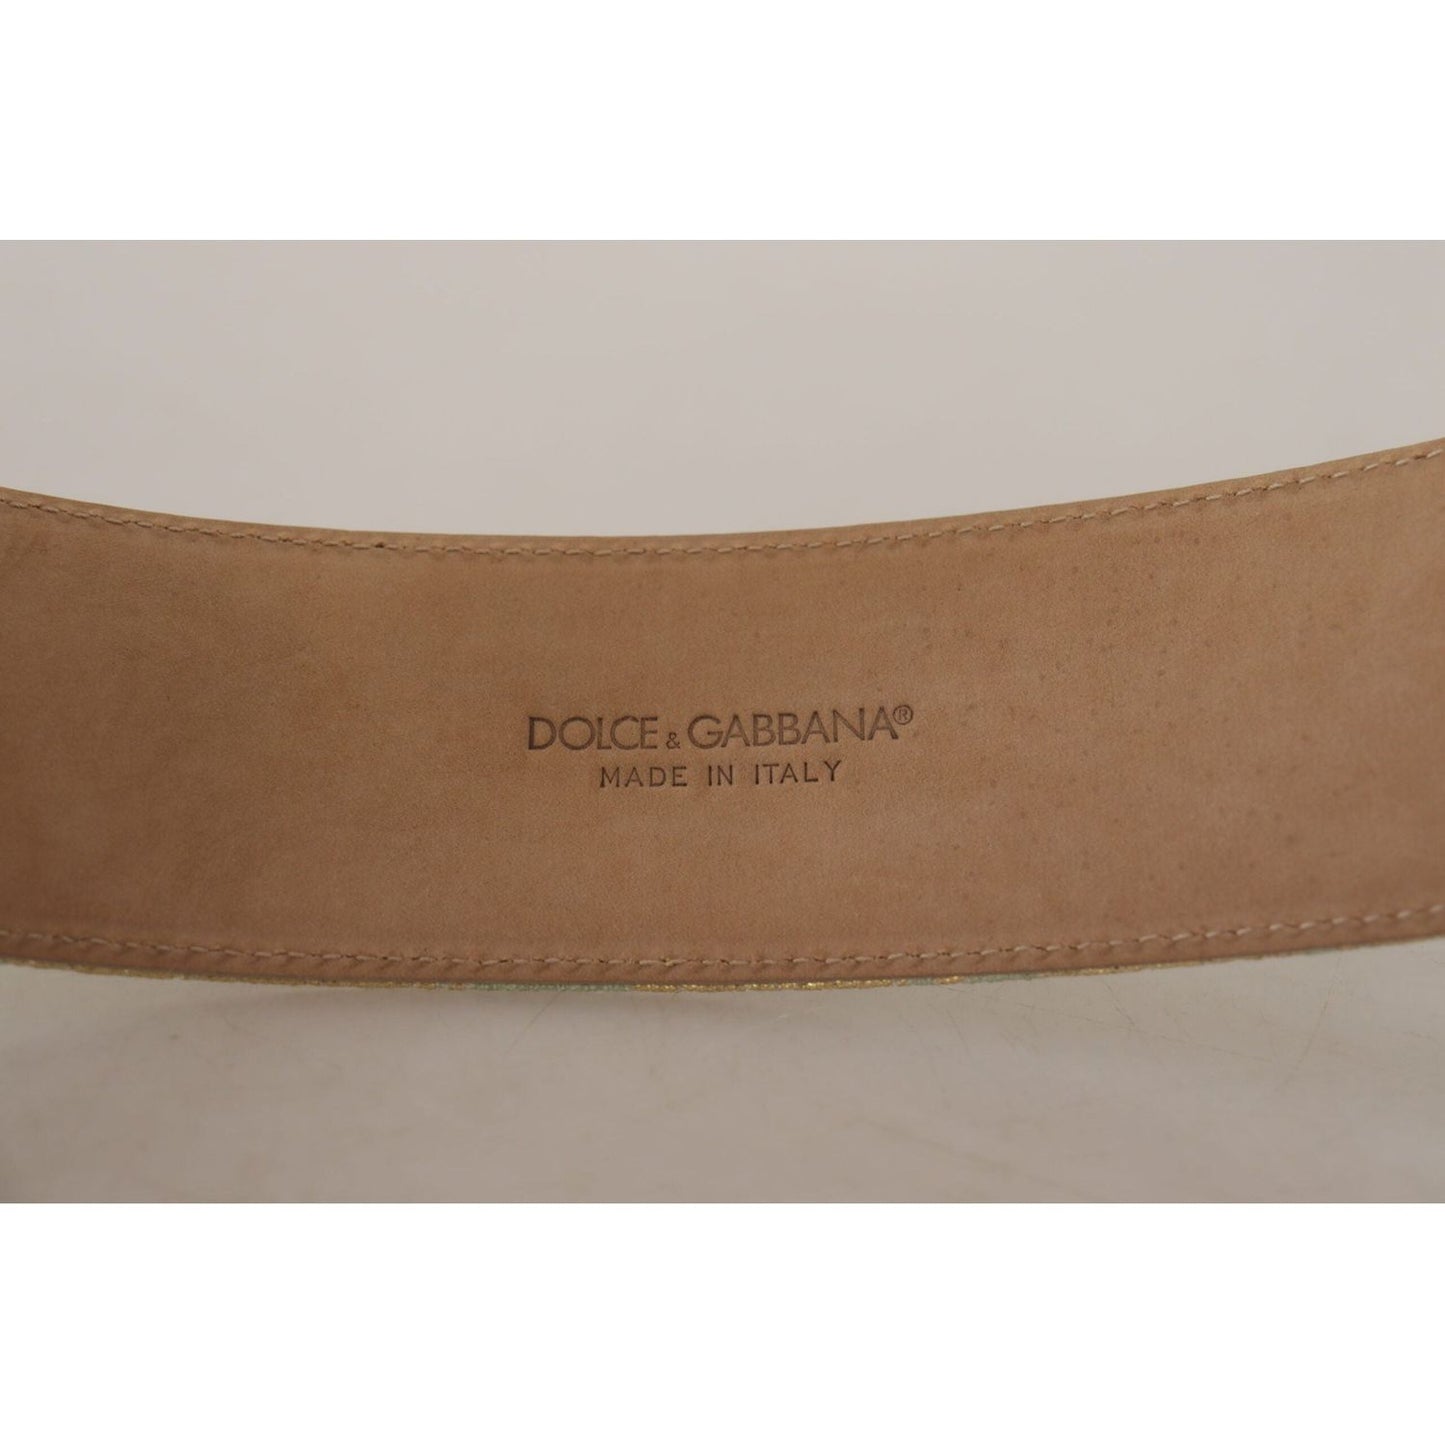 Dolce & Gabbana Engraved Buckle Leather Belt - Green & Gold green-wide-brocade-jacquard-dg-logo-gold-buckle-belt IMG_9141-scaled-49a9a3dc-7c8.jpg